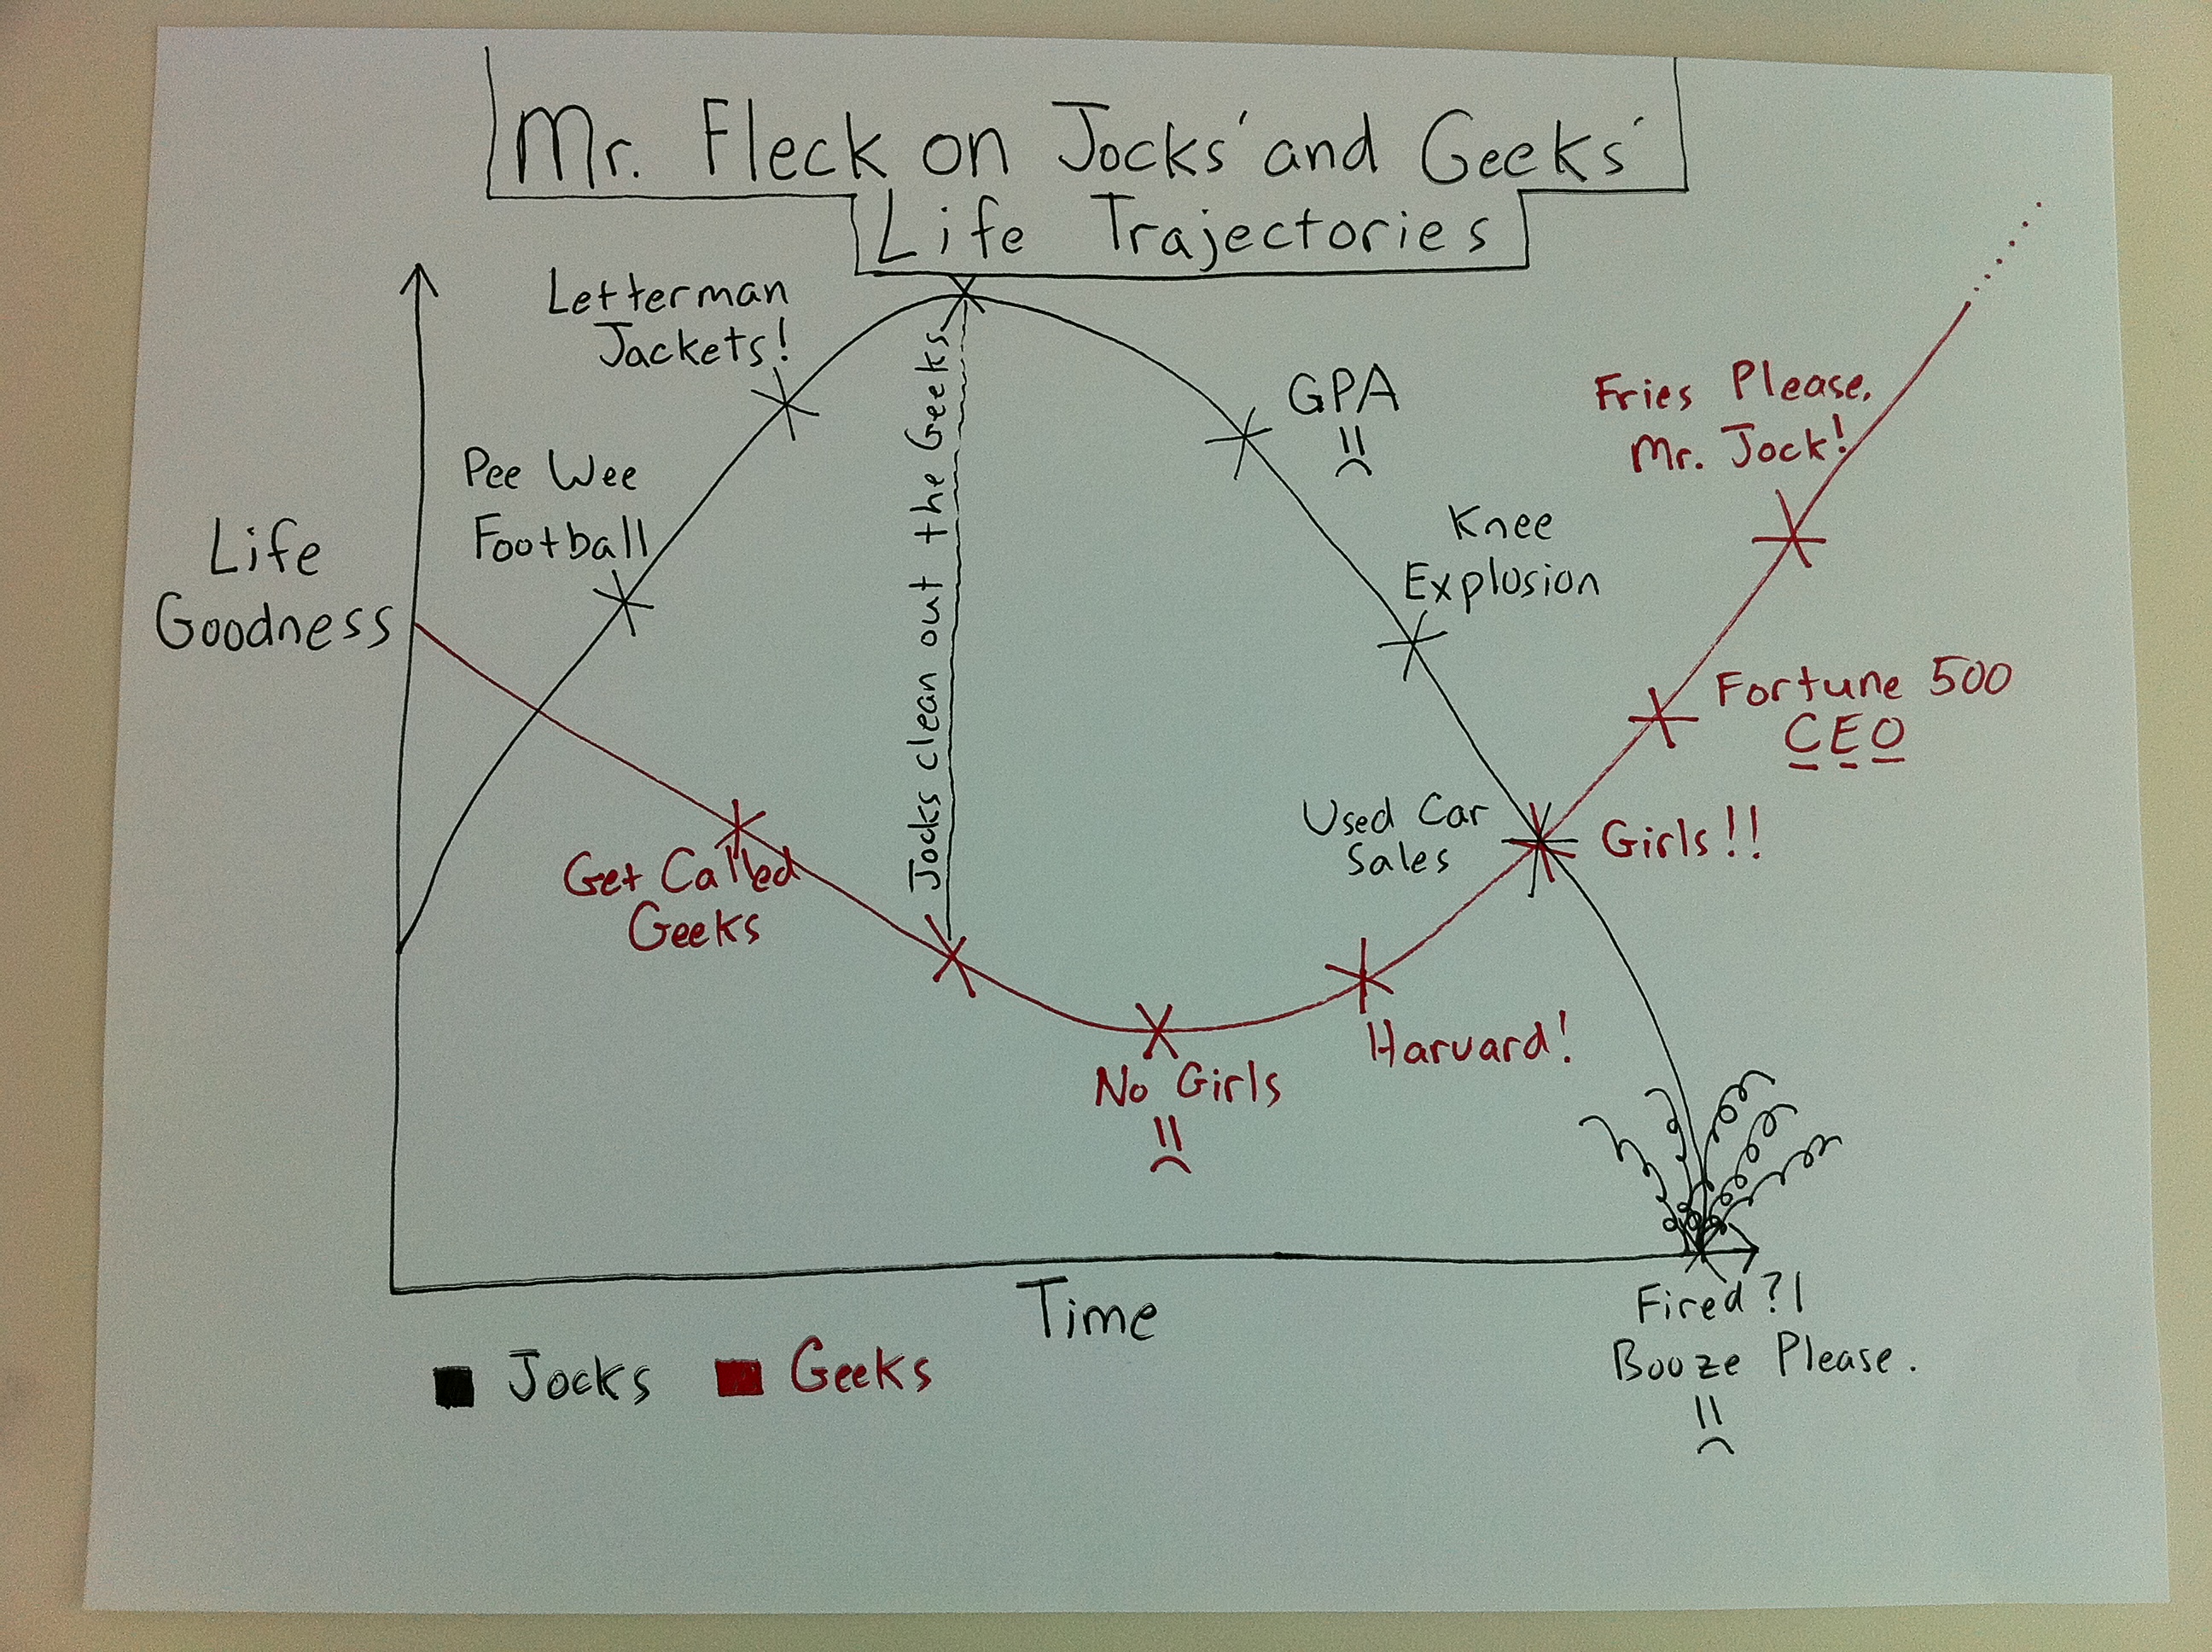 Geeks win while the Jocks crash and burn